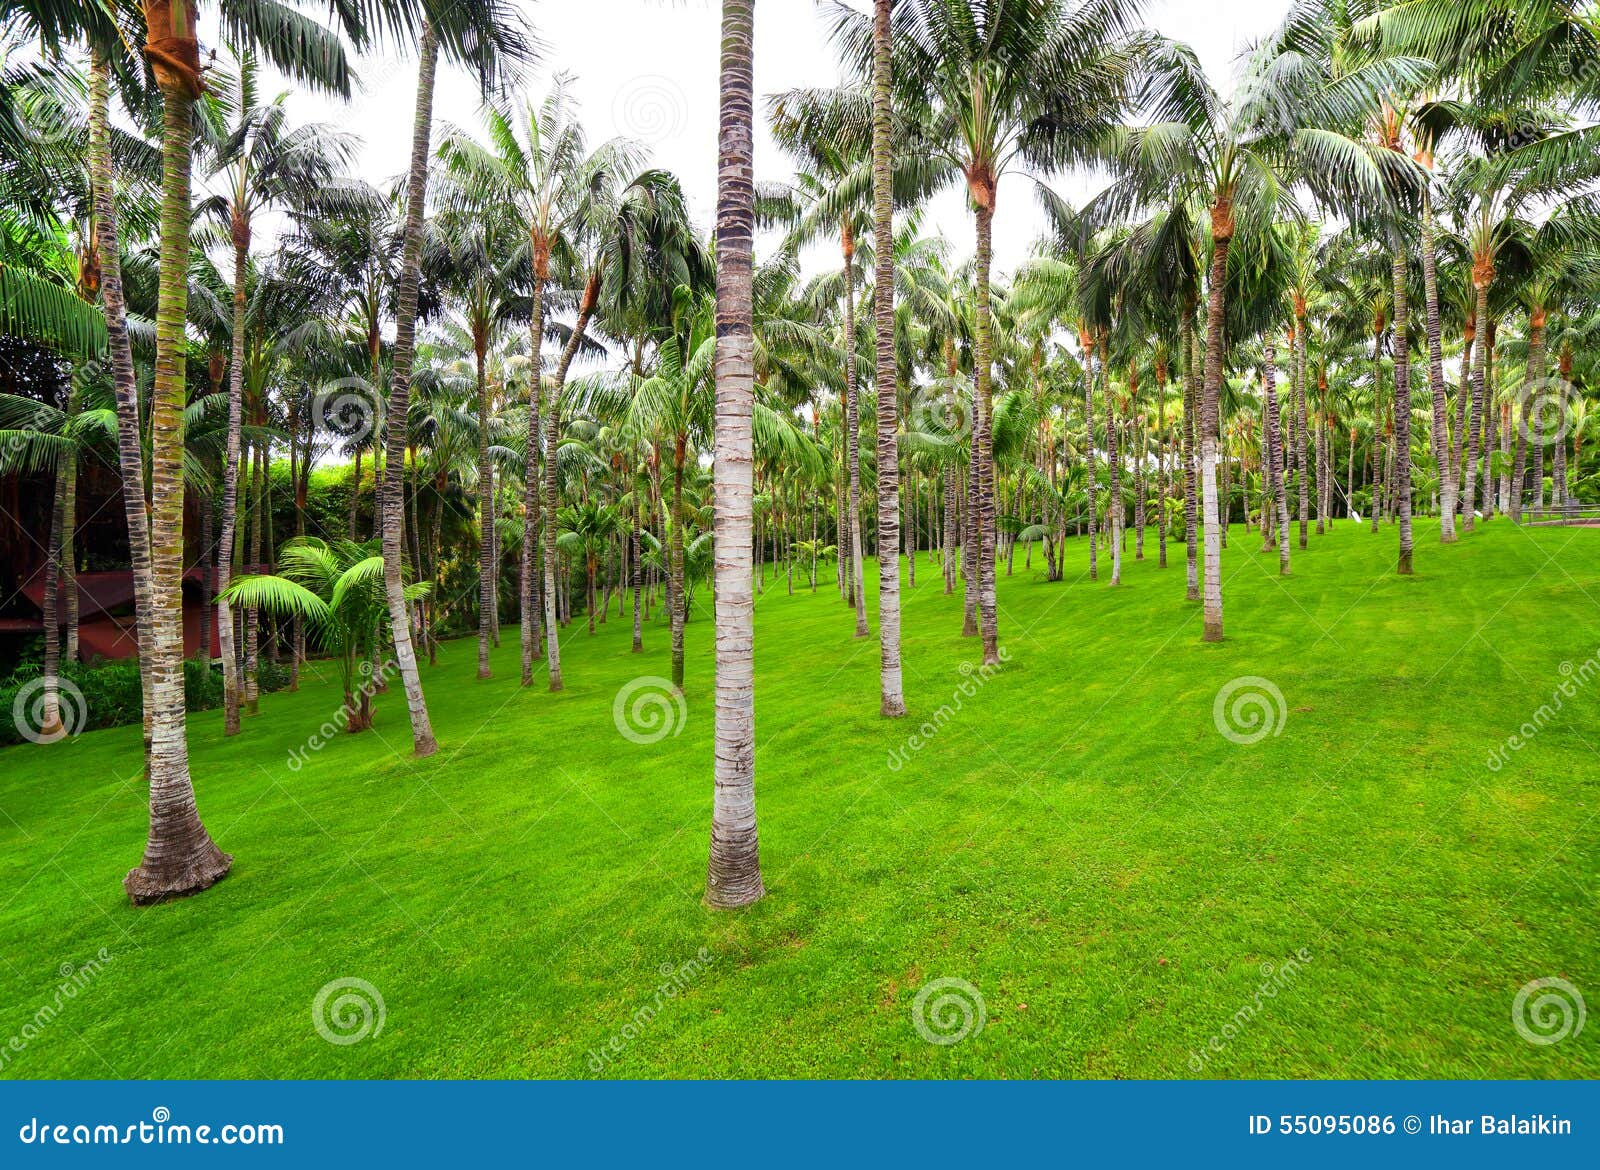 palm grove in loro park, tenerife